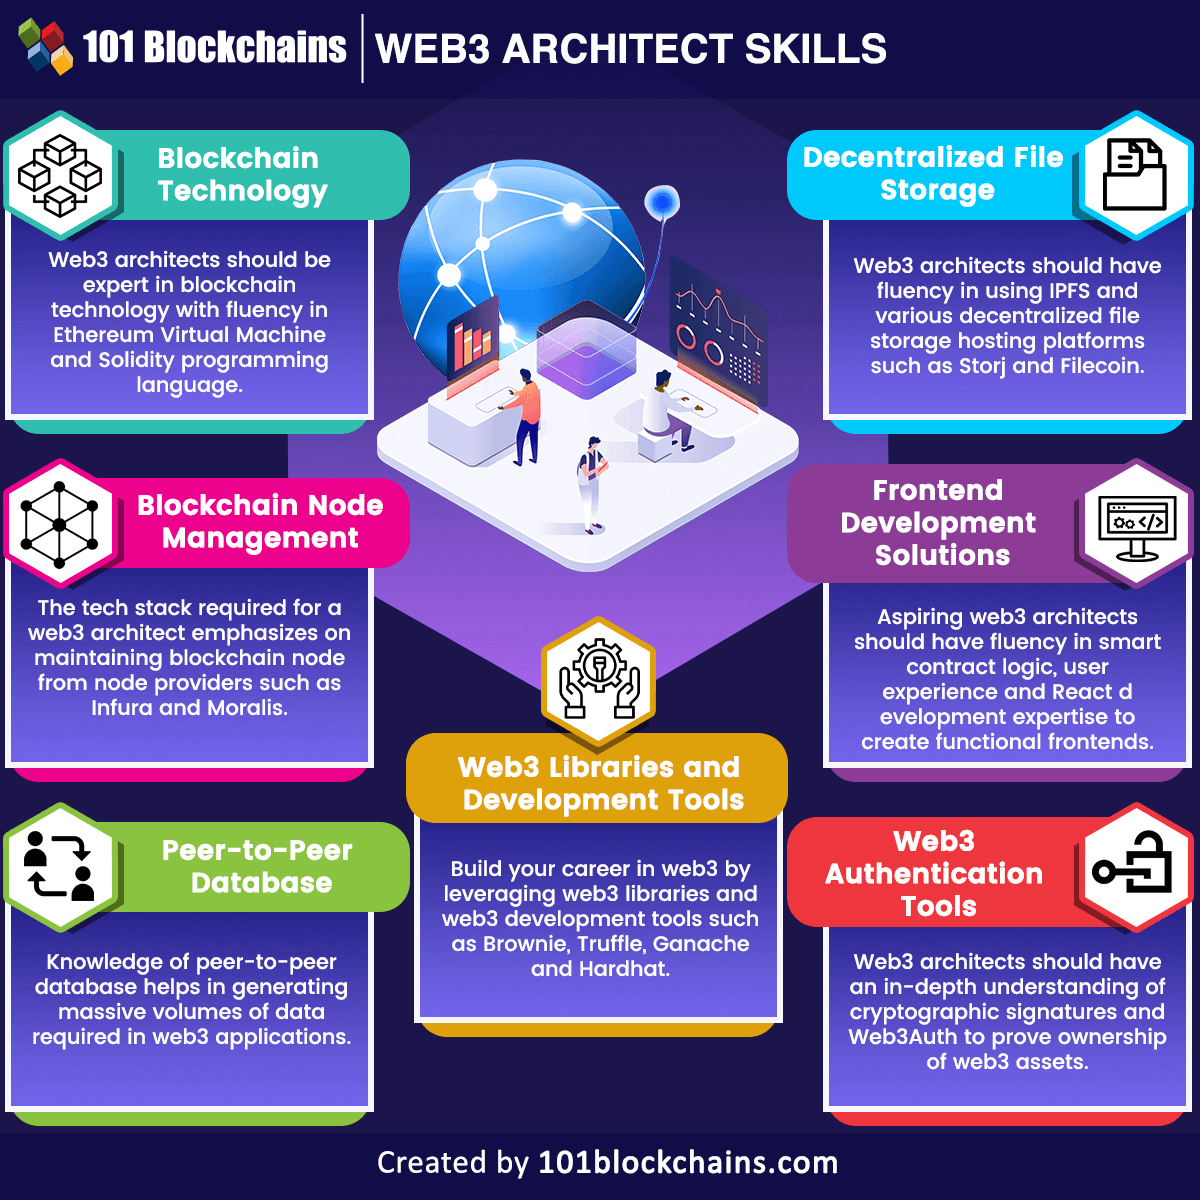 Web3 Architect Skills